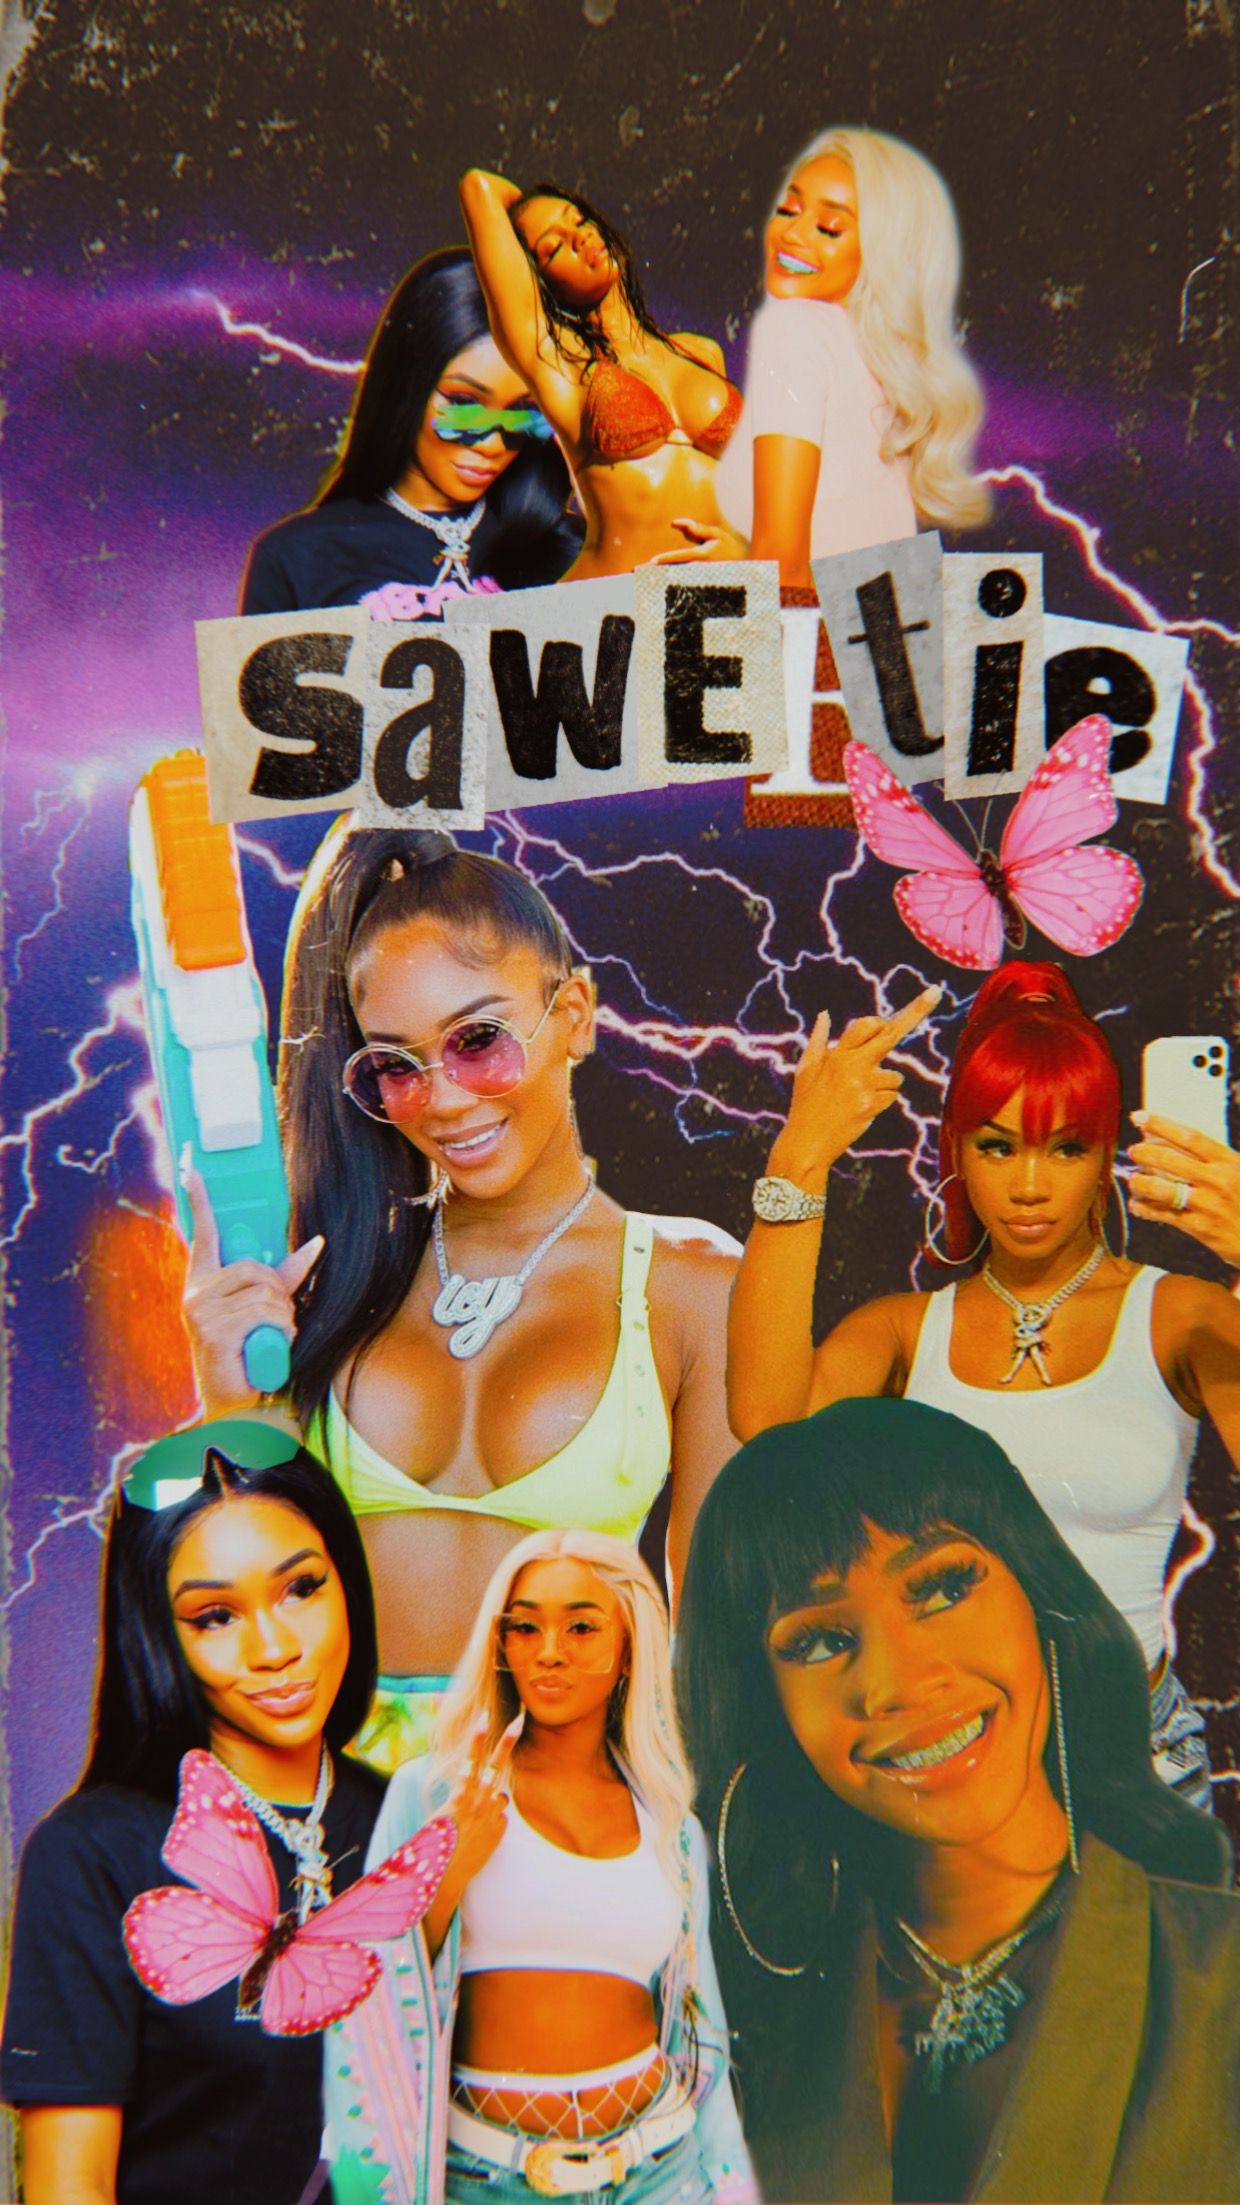 Saweetie Images Wallpapers